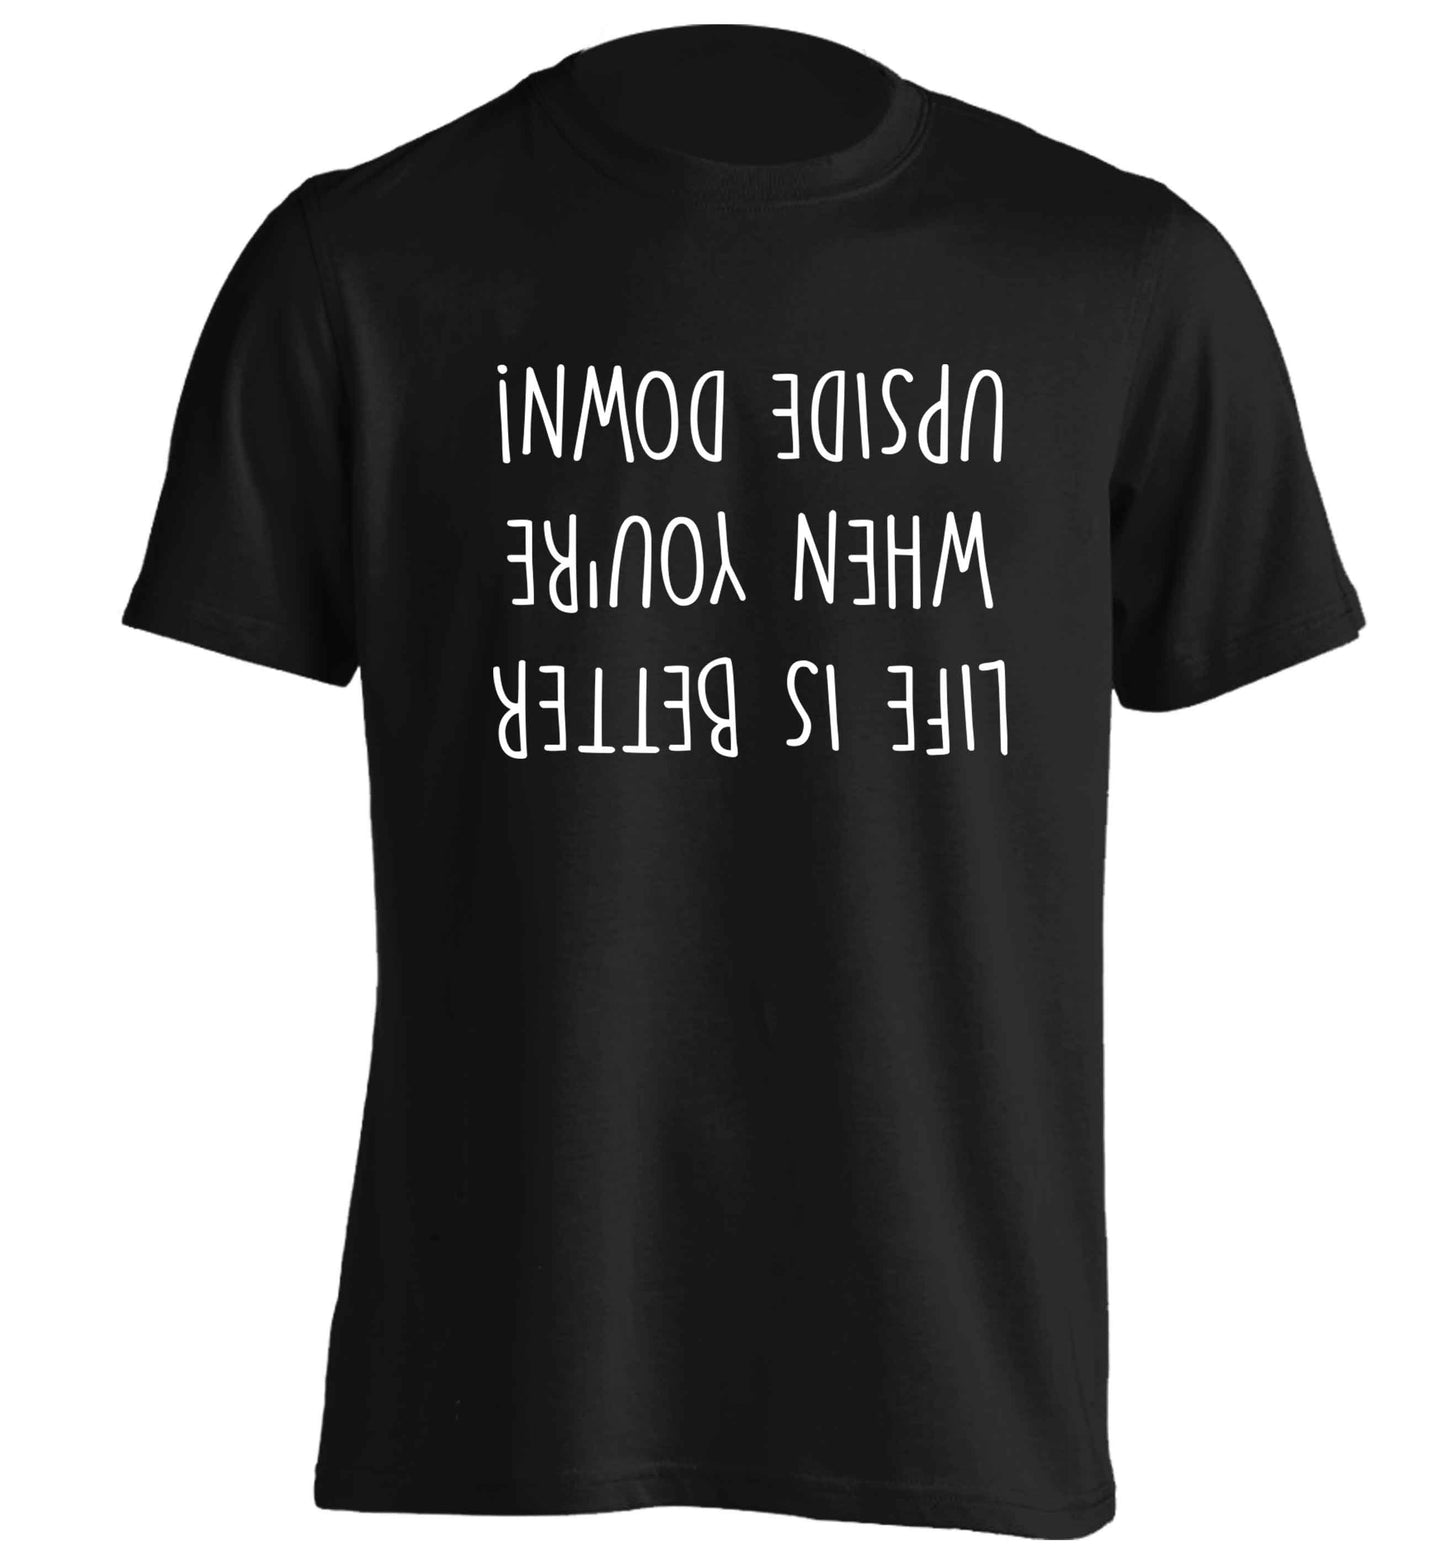 Life is better upside down adults unisex black Tshirt 2XL